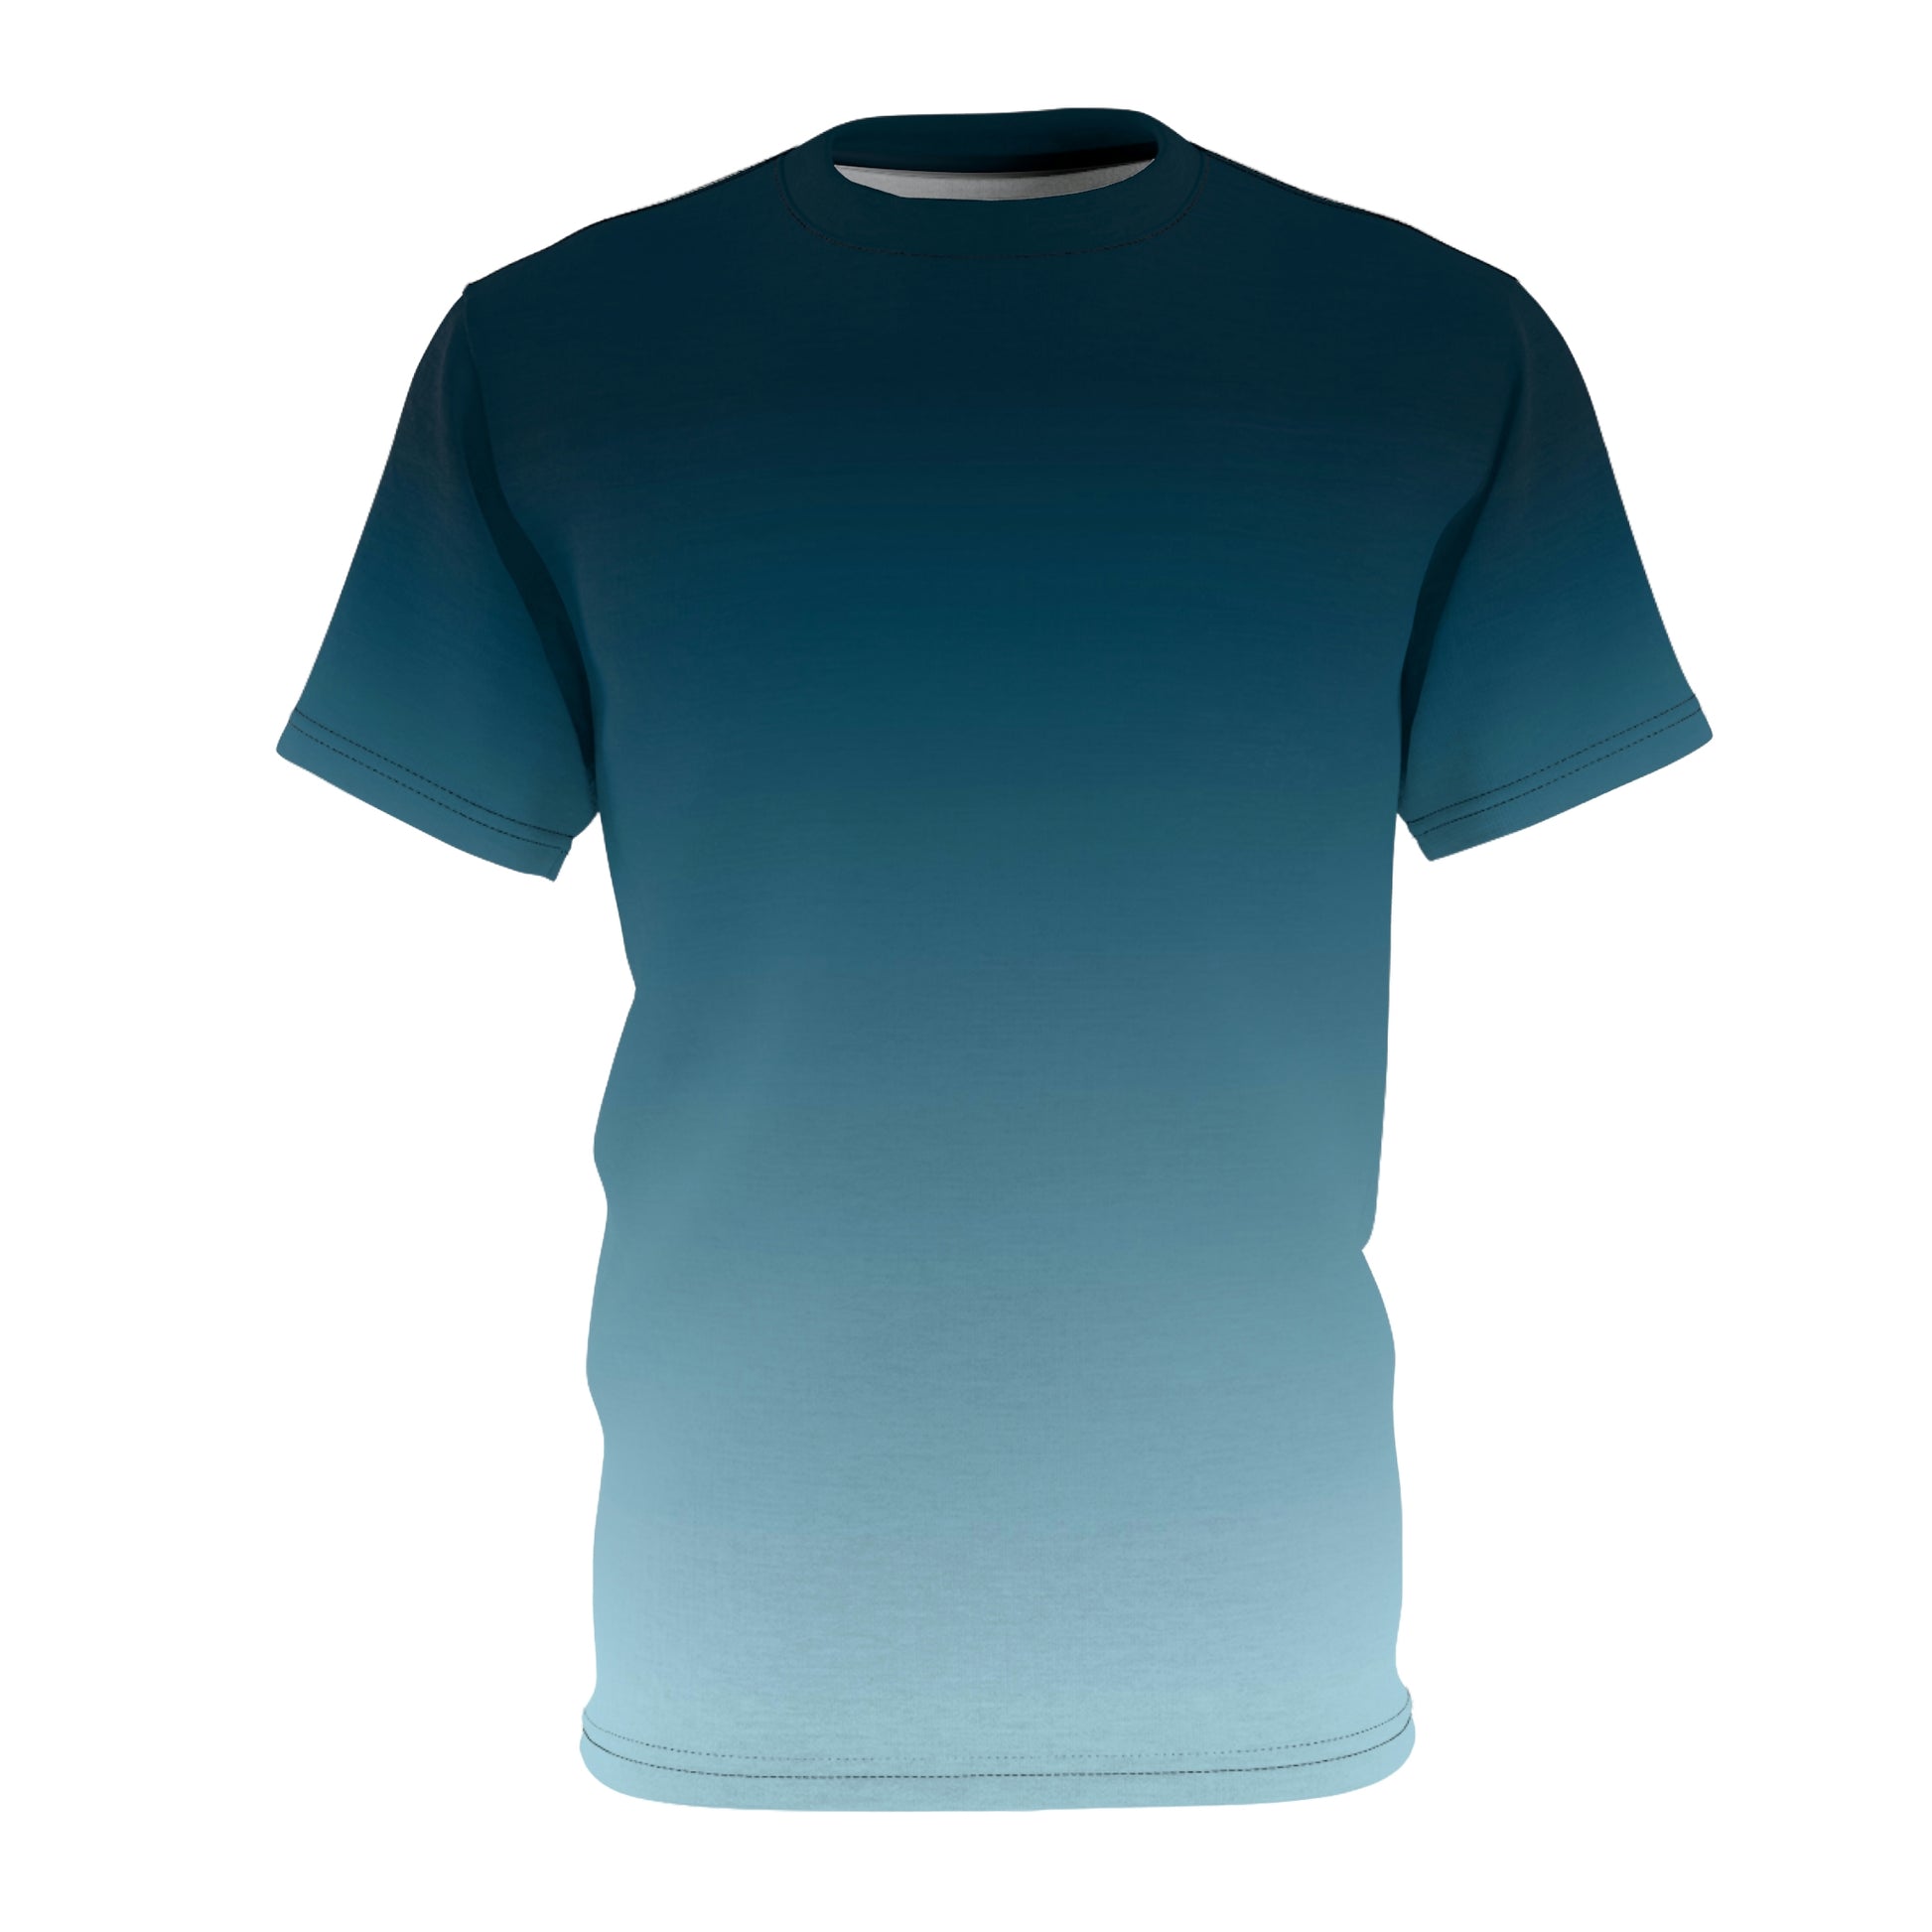 Blue Ombre Tshirt, Dark To Light Gradient Dip Dye Men Women Adult Aesthetic Crewneck Designer Tee Short Sleeve Shirt Top Starcove Fashion